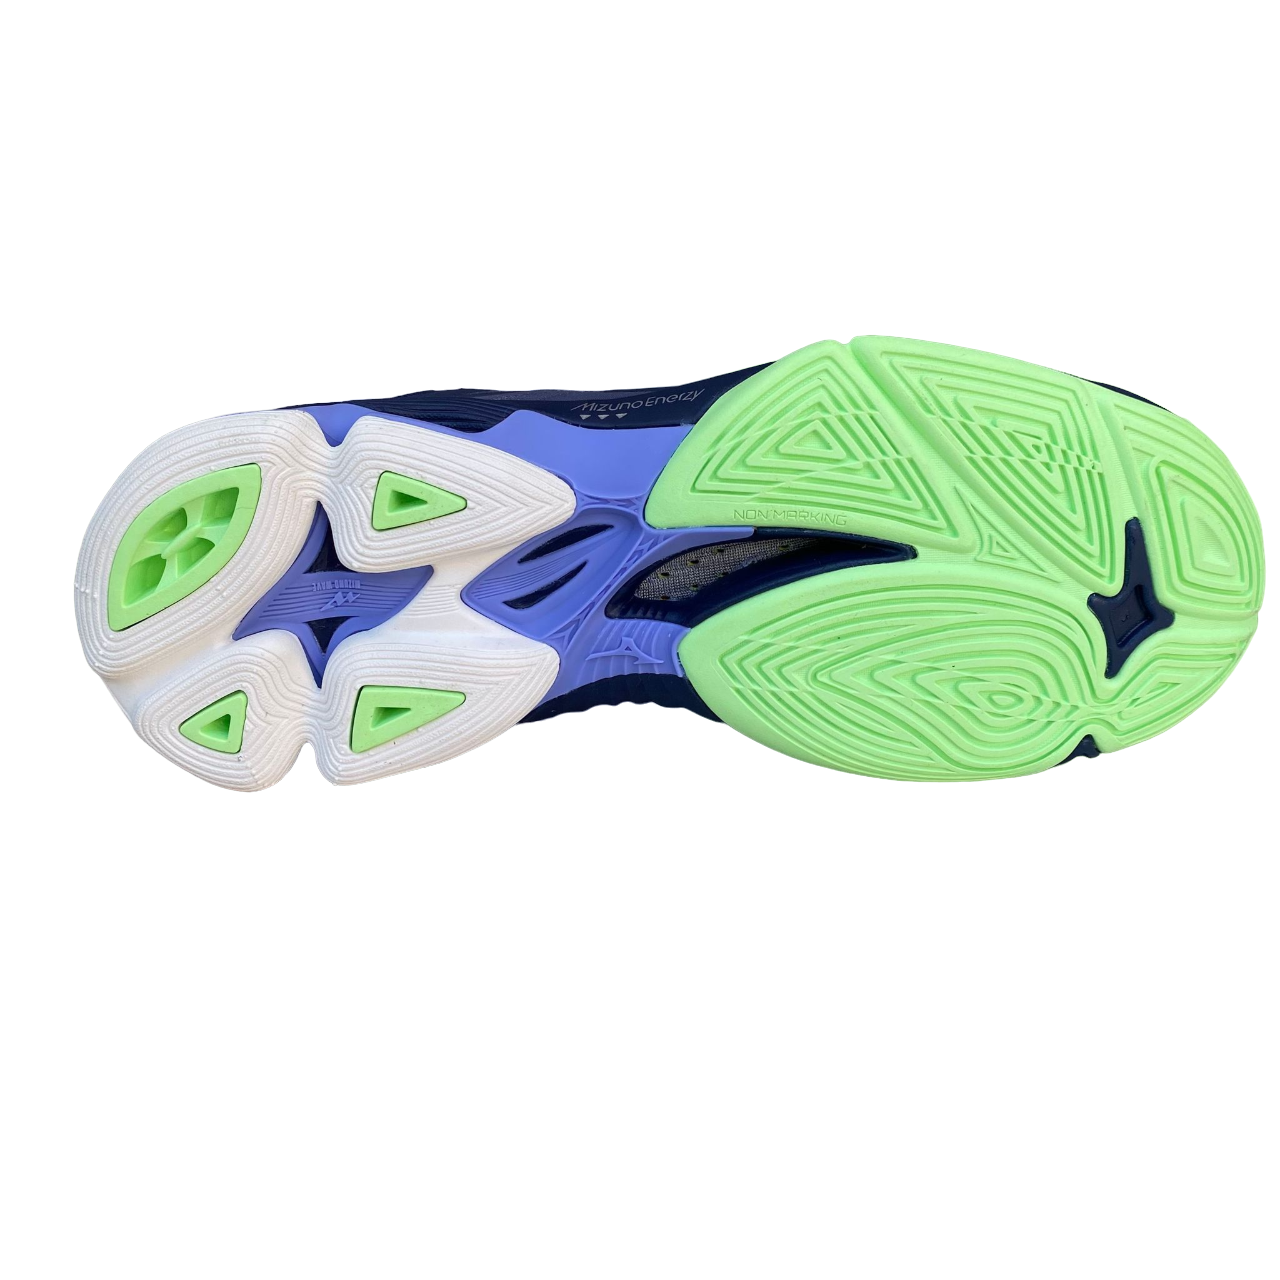 Mizuno scarpa da pallavolo alta da uomo Wave Lightning Z7 blu-verde